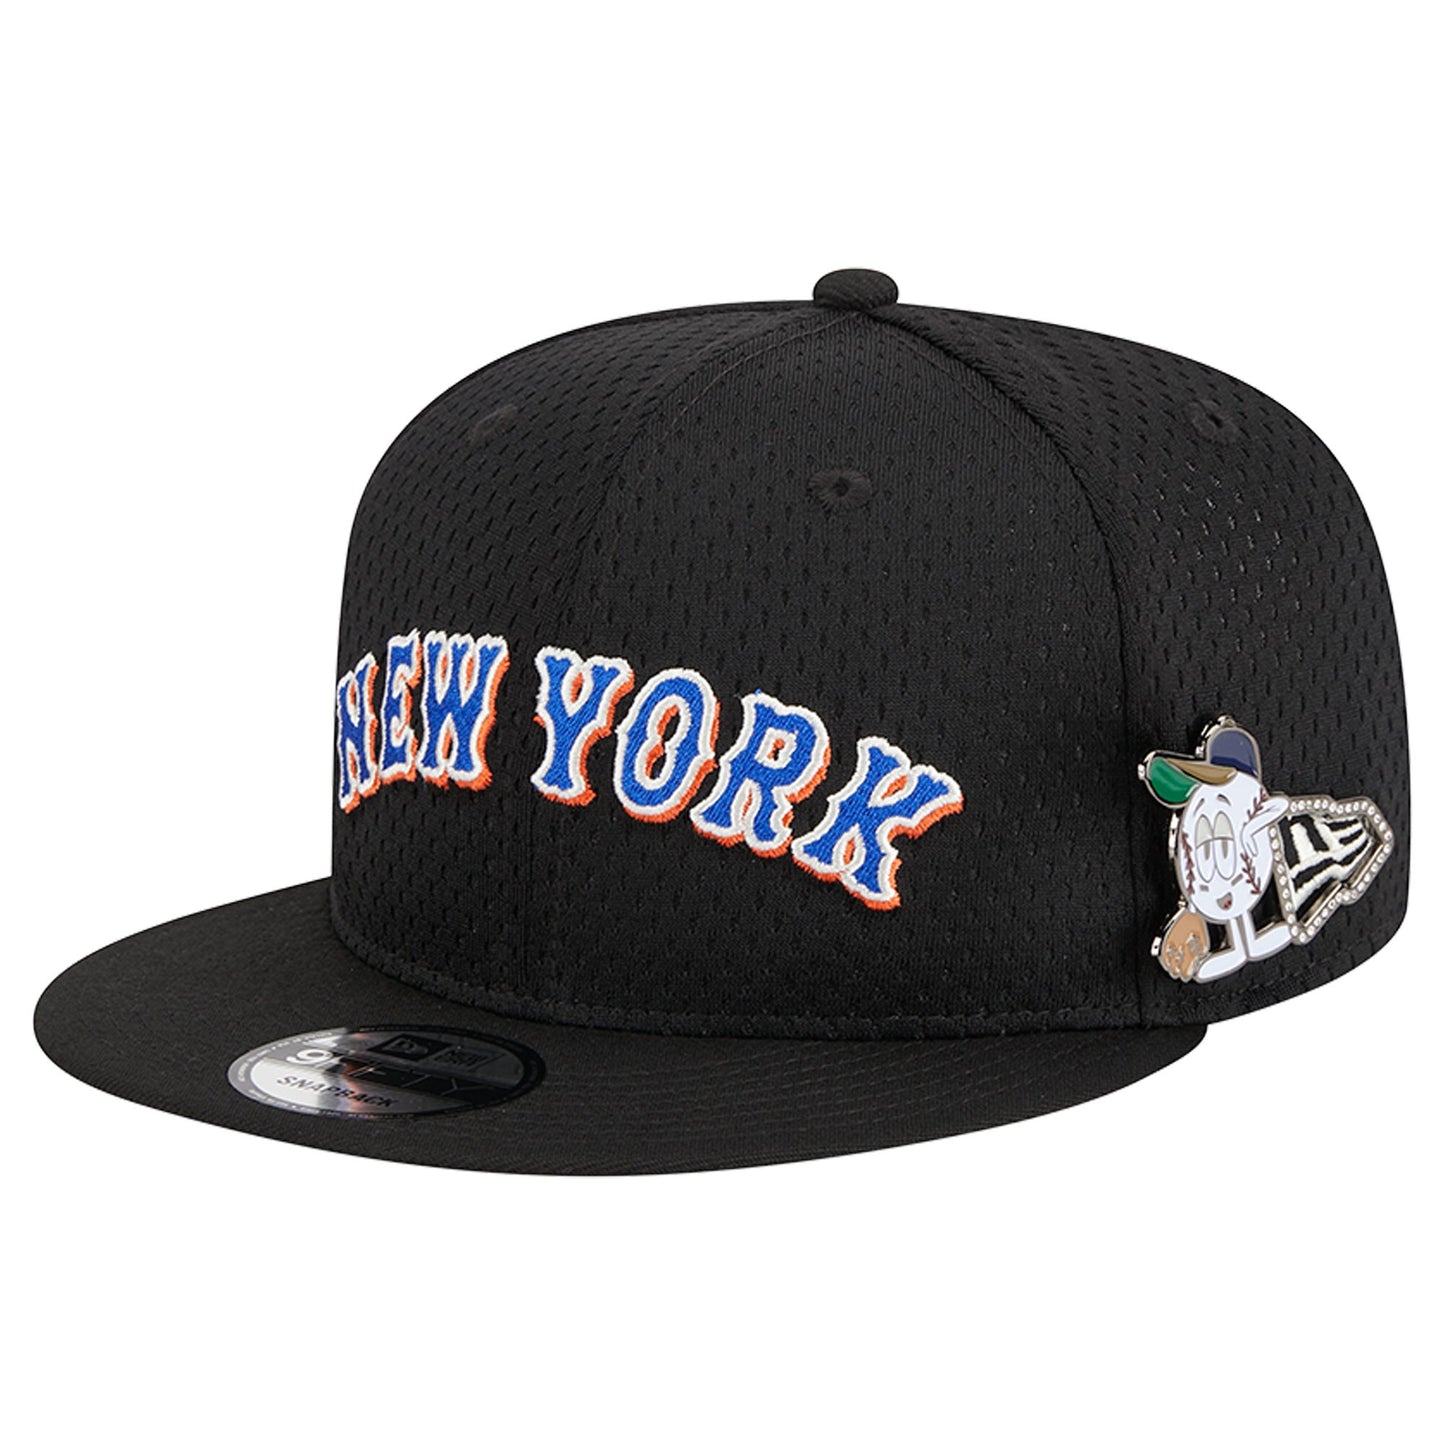 New York Mets New Era Post Up Pin 9FIFTY Snapback Hat - Black